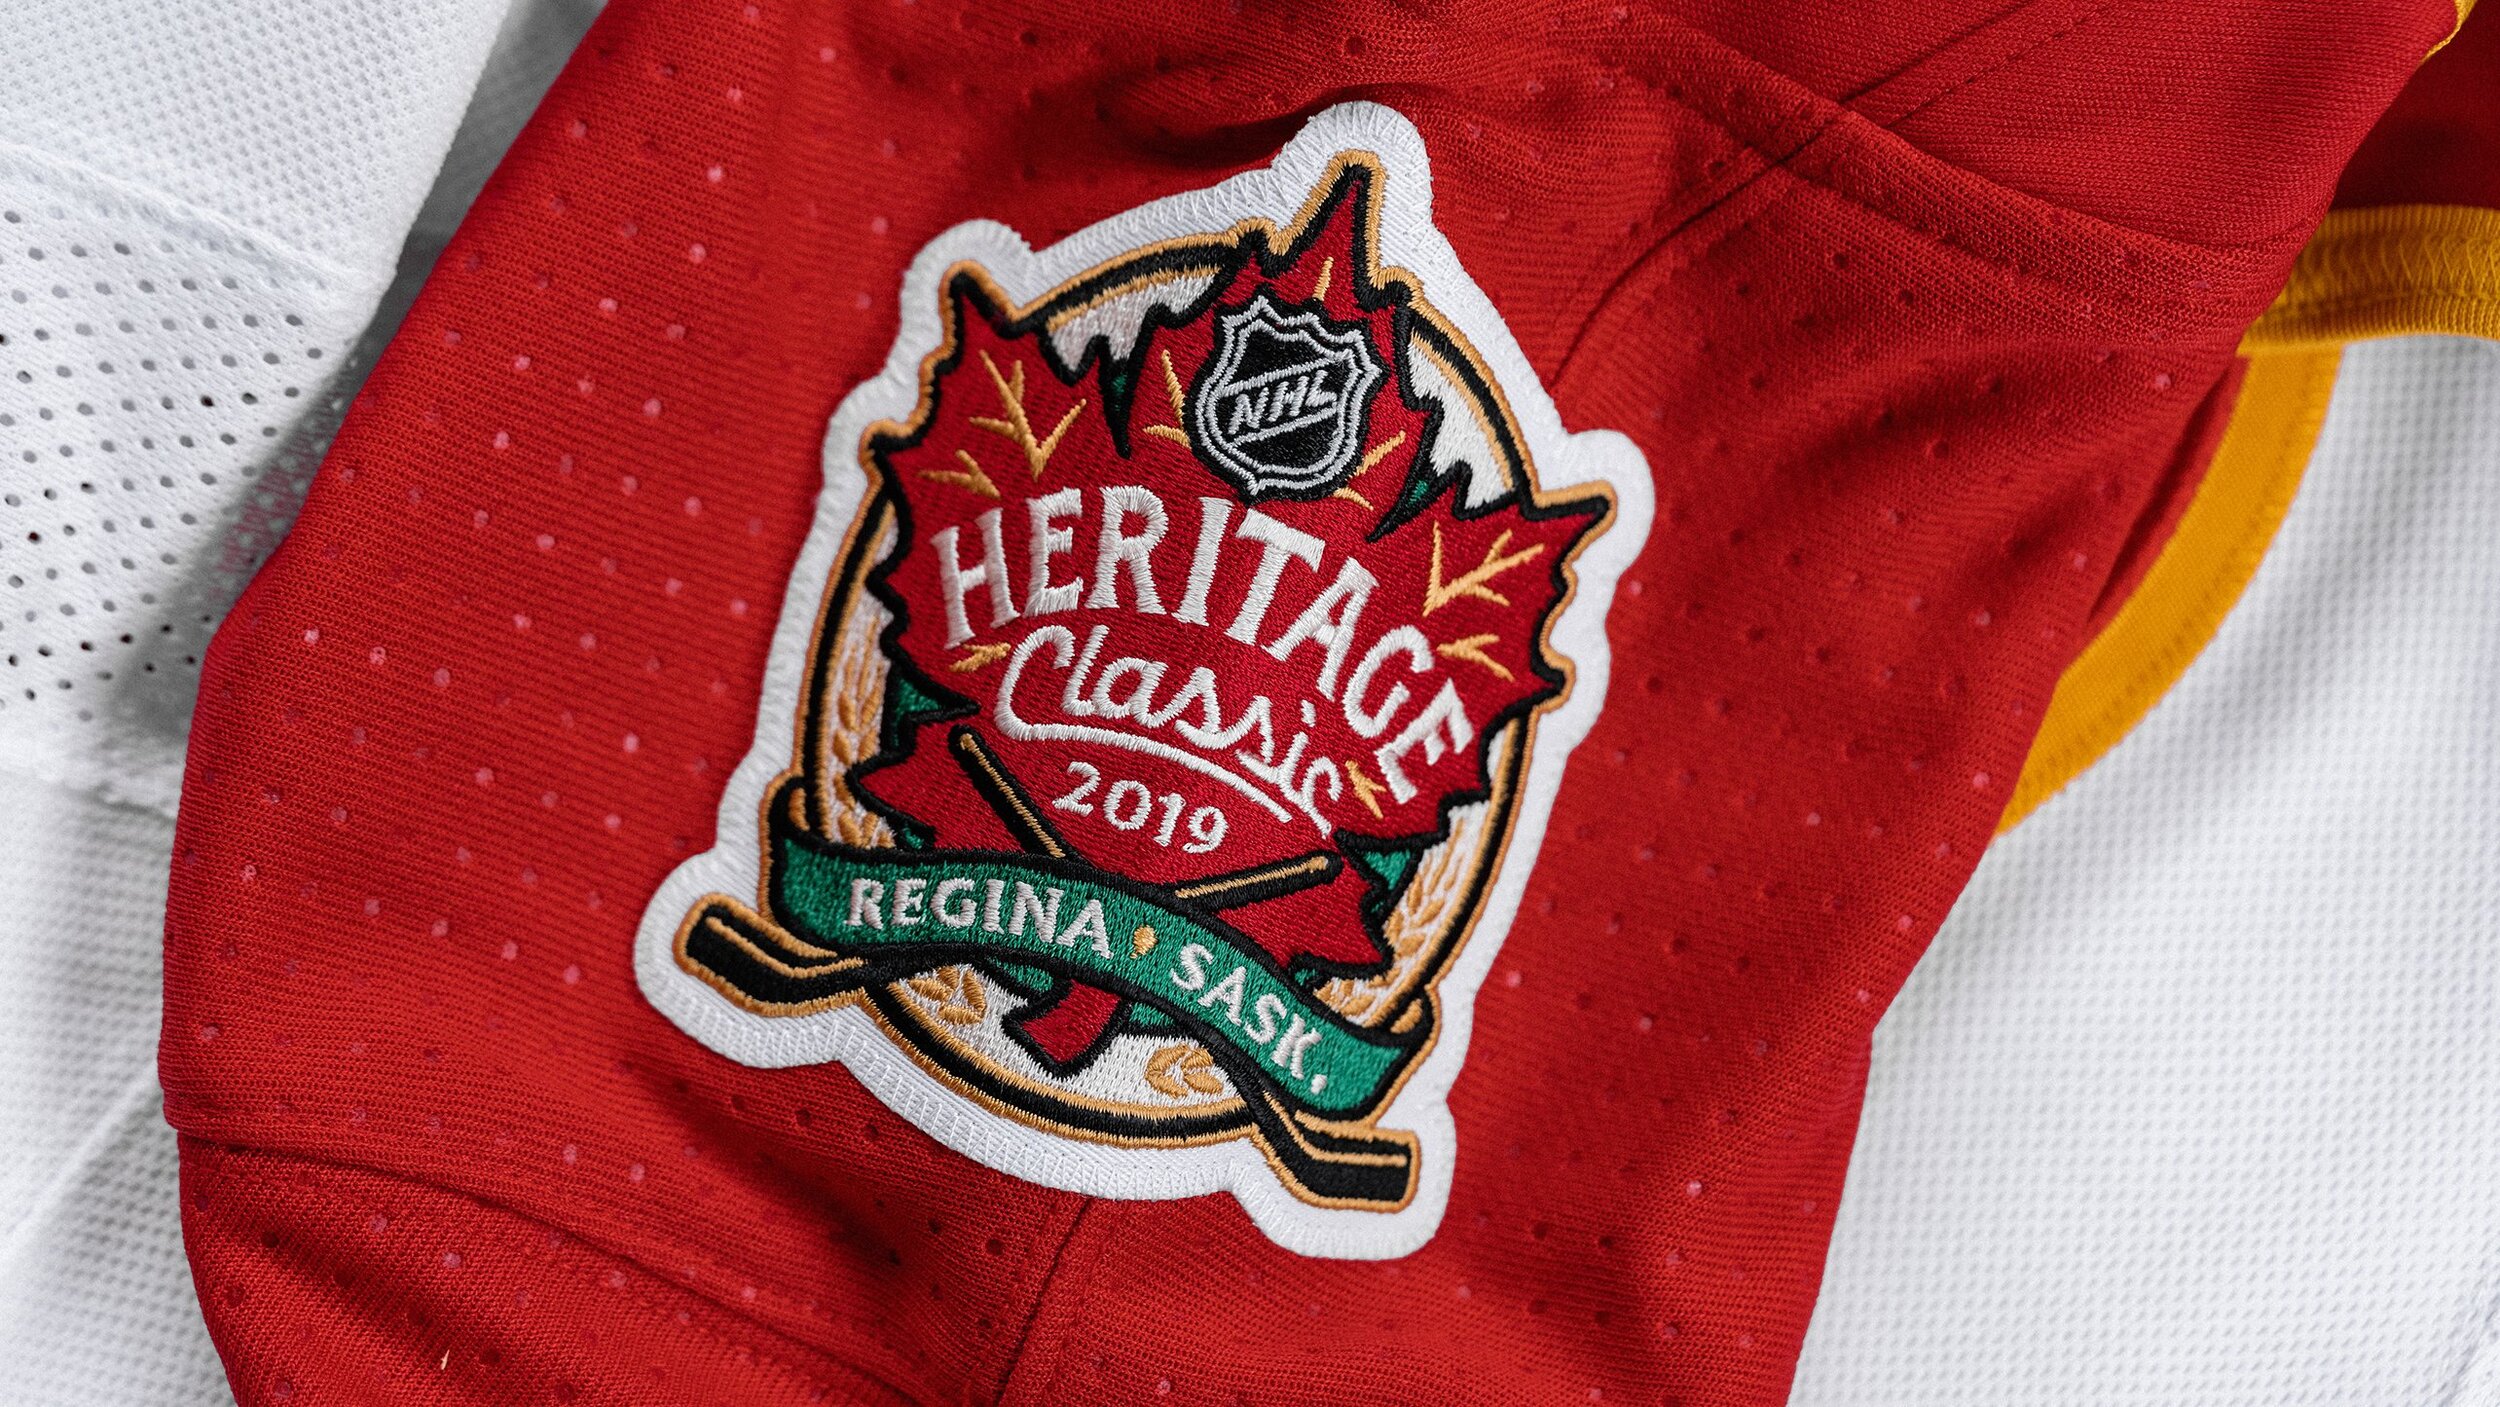 NHL Heritage Classic , Heritage Classic Apparel , NHL Heritage Classic Gear